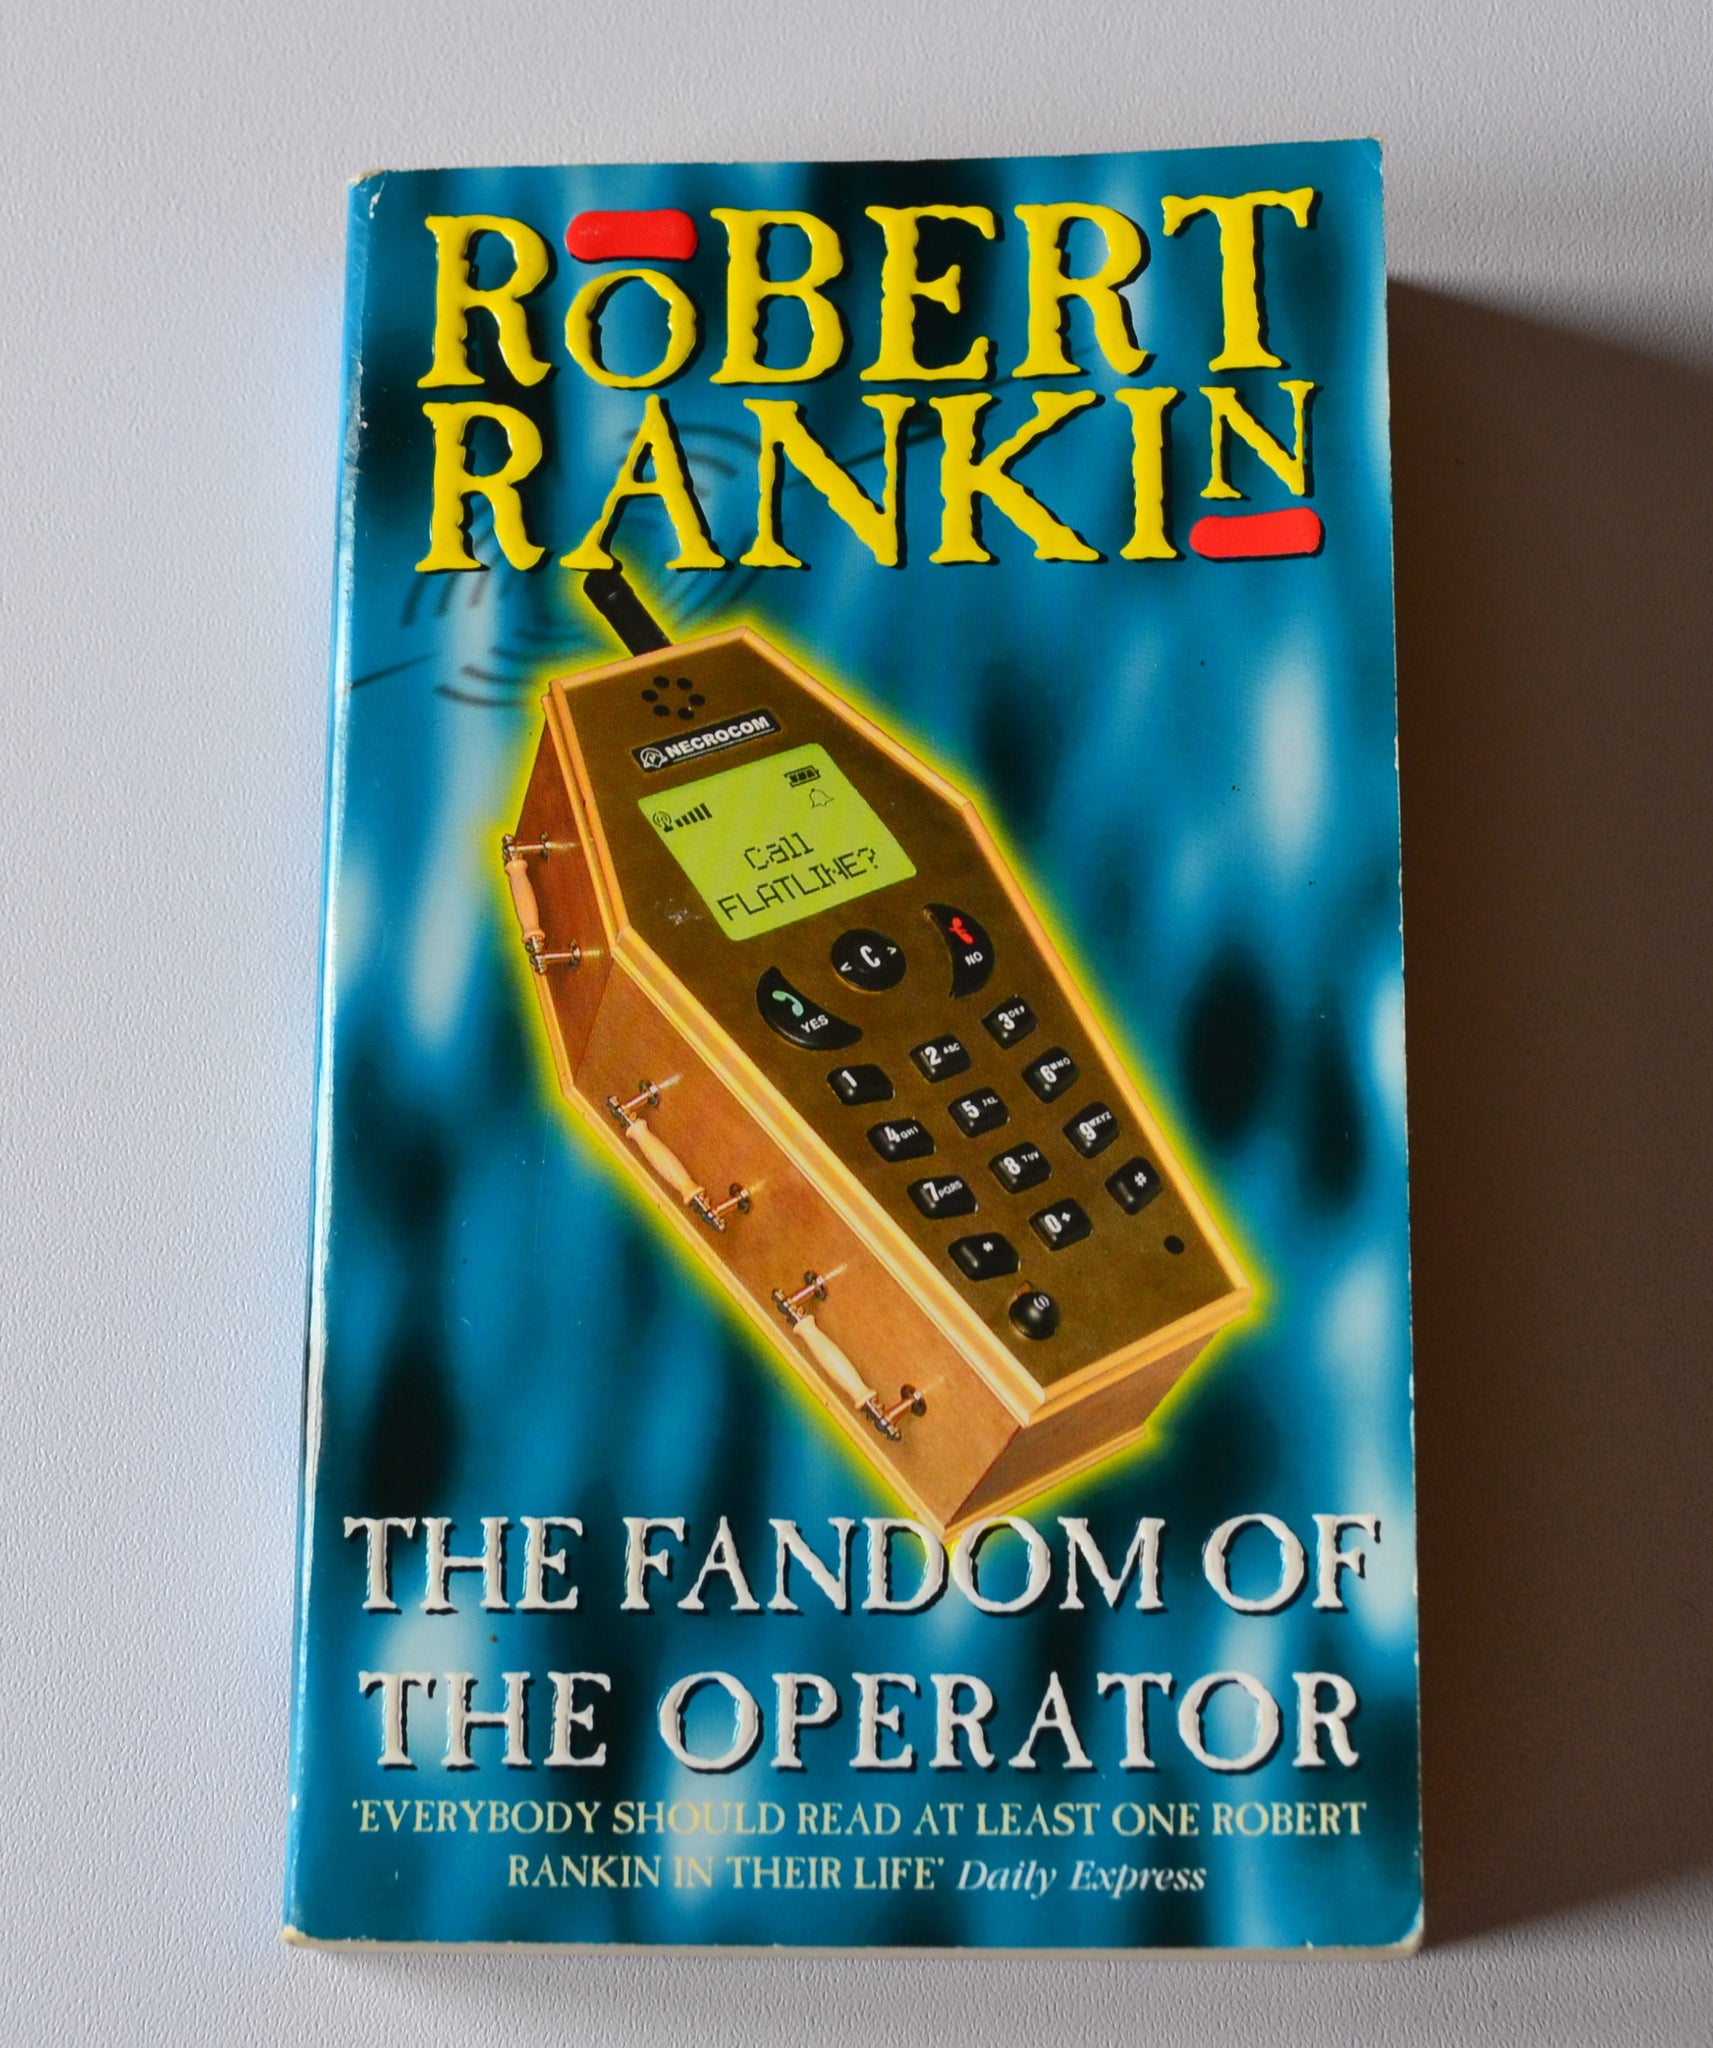 The Fandom of the Operator